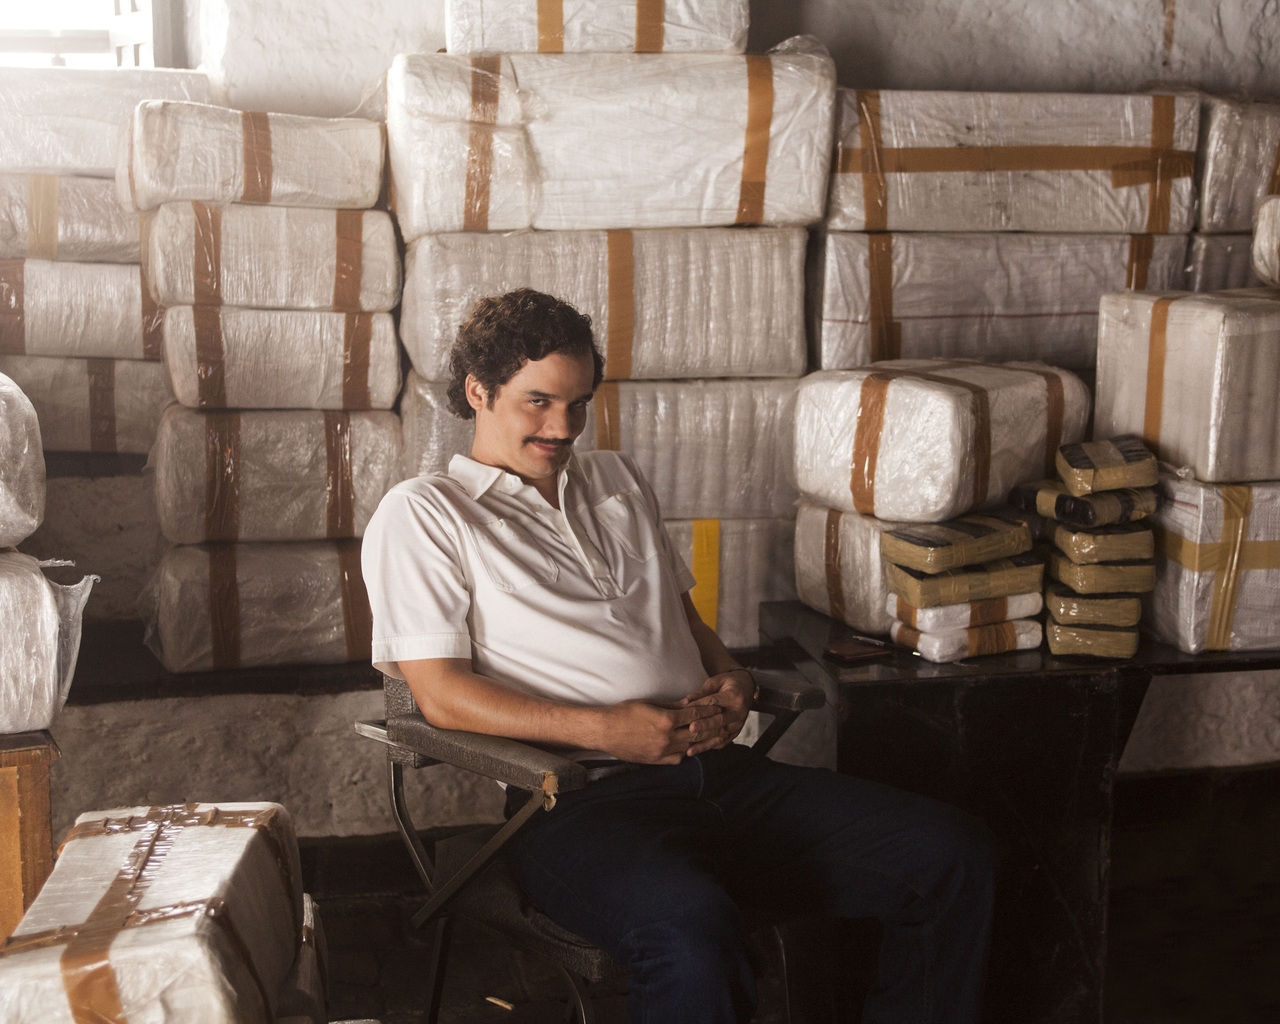 Narcos Pablo Escobar for 1280 x 1024 resolution